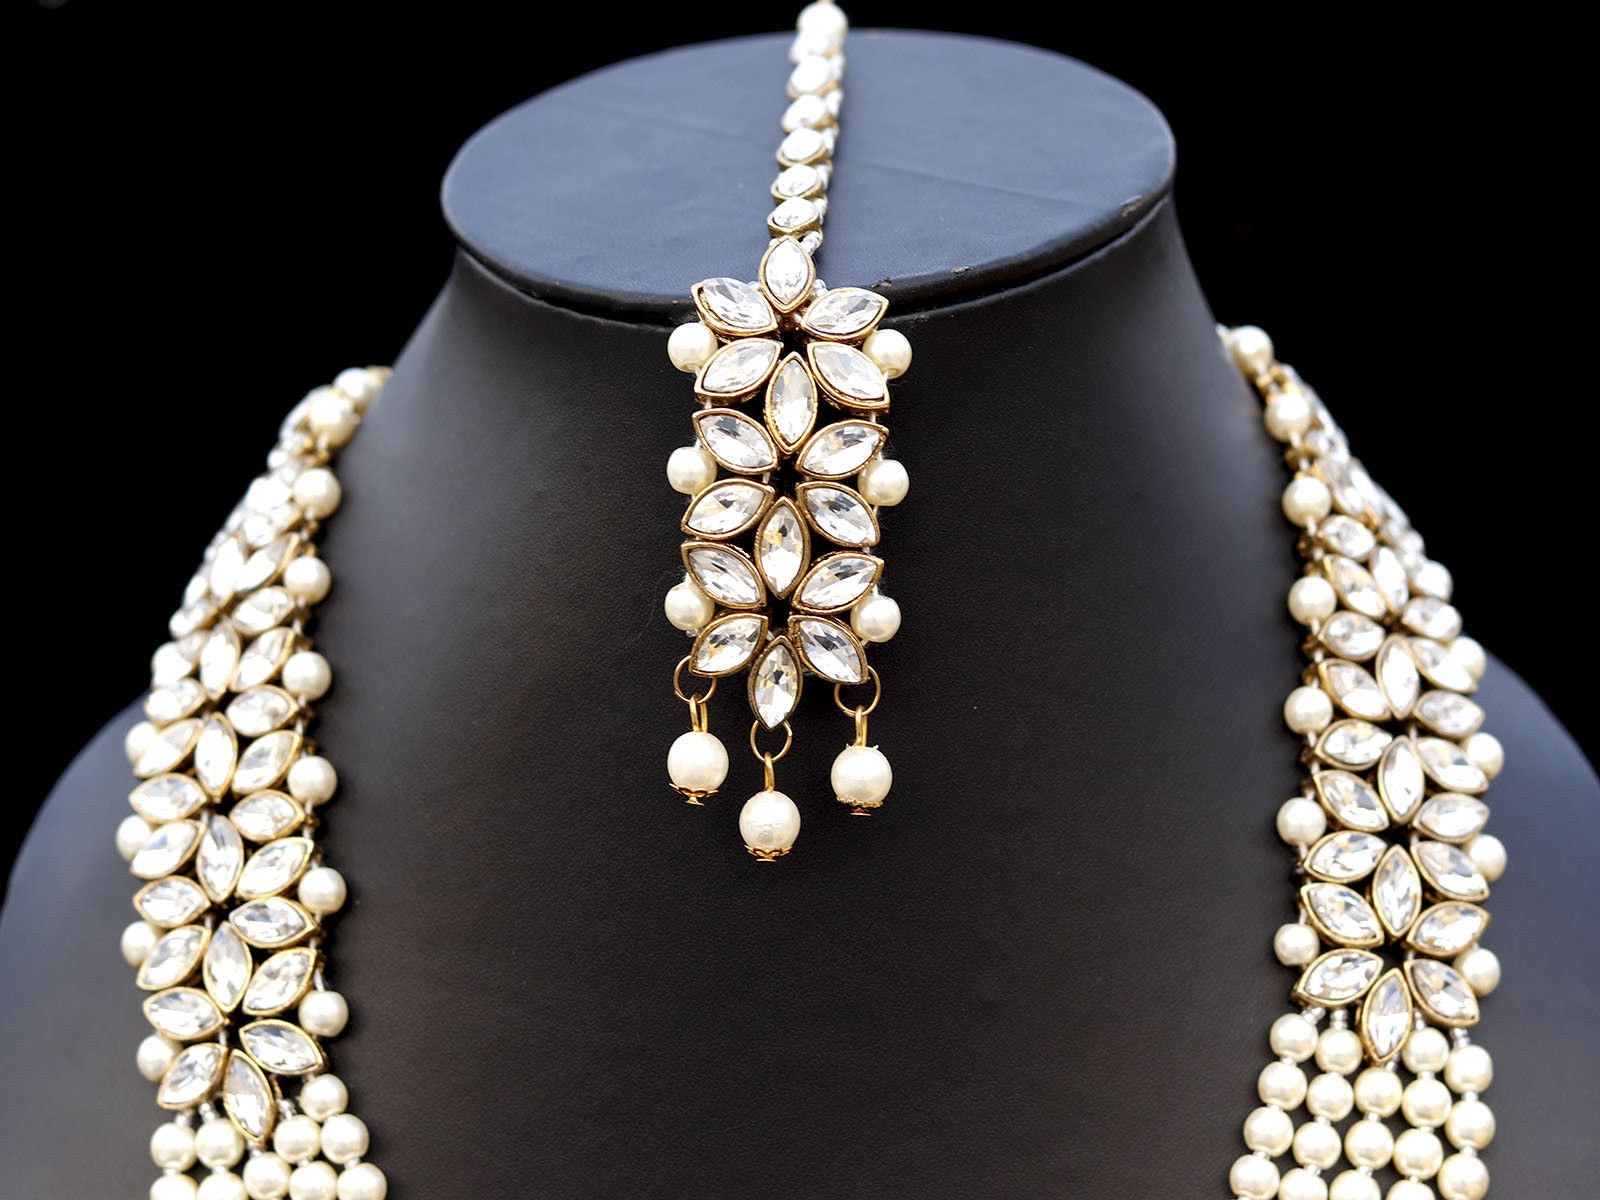 5 Layers Pearls Necklace Earrings Mang Tikka CZ Diamonds Long - Etsy